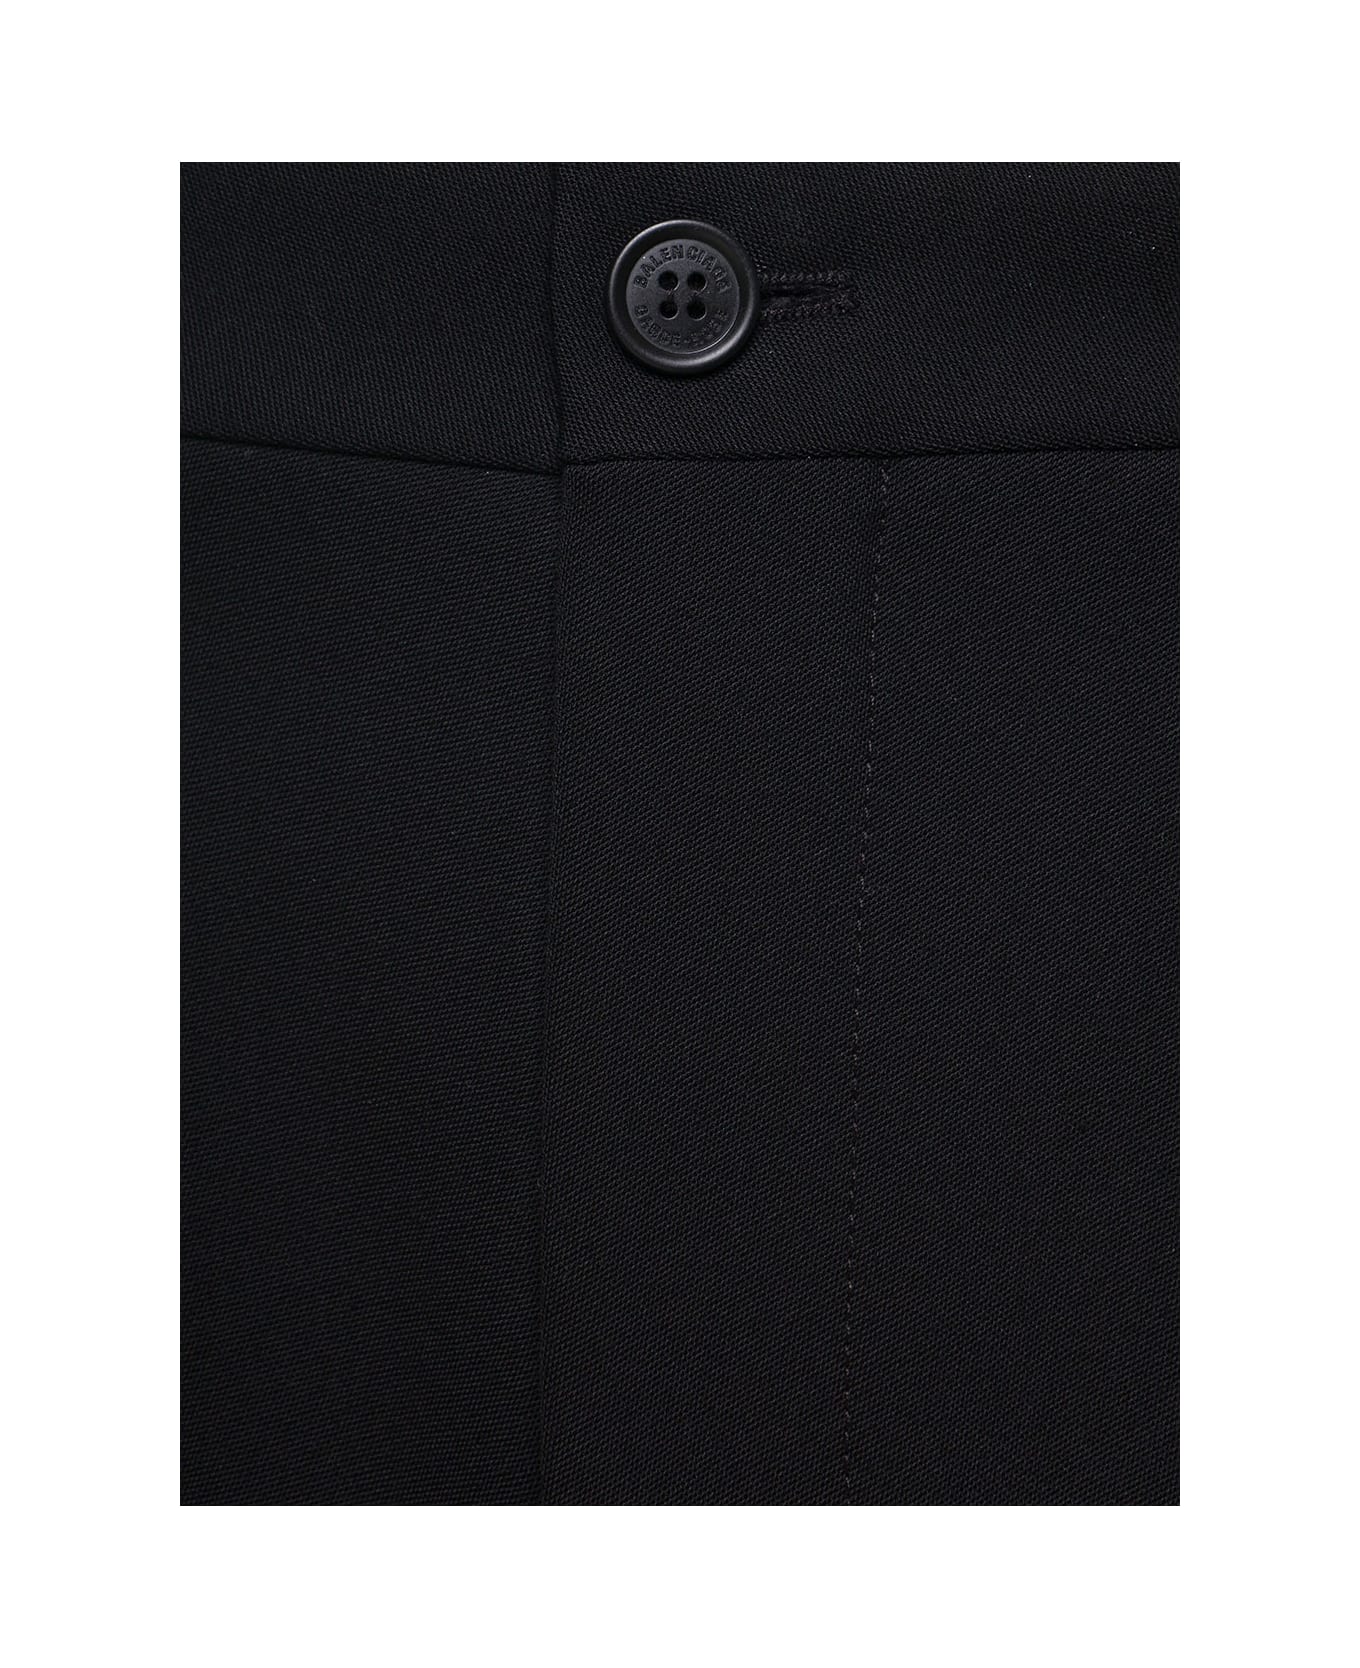 Balenciaga Oversized Black Tailored Pants In Wool Blend Man - Black